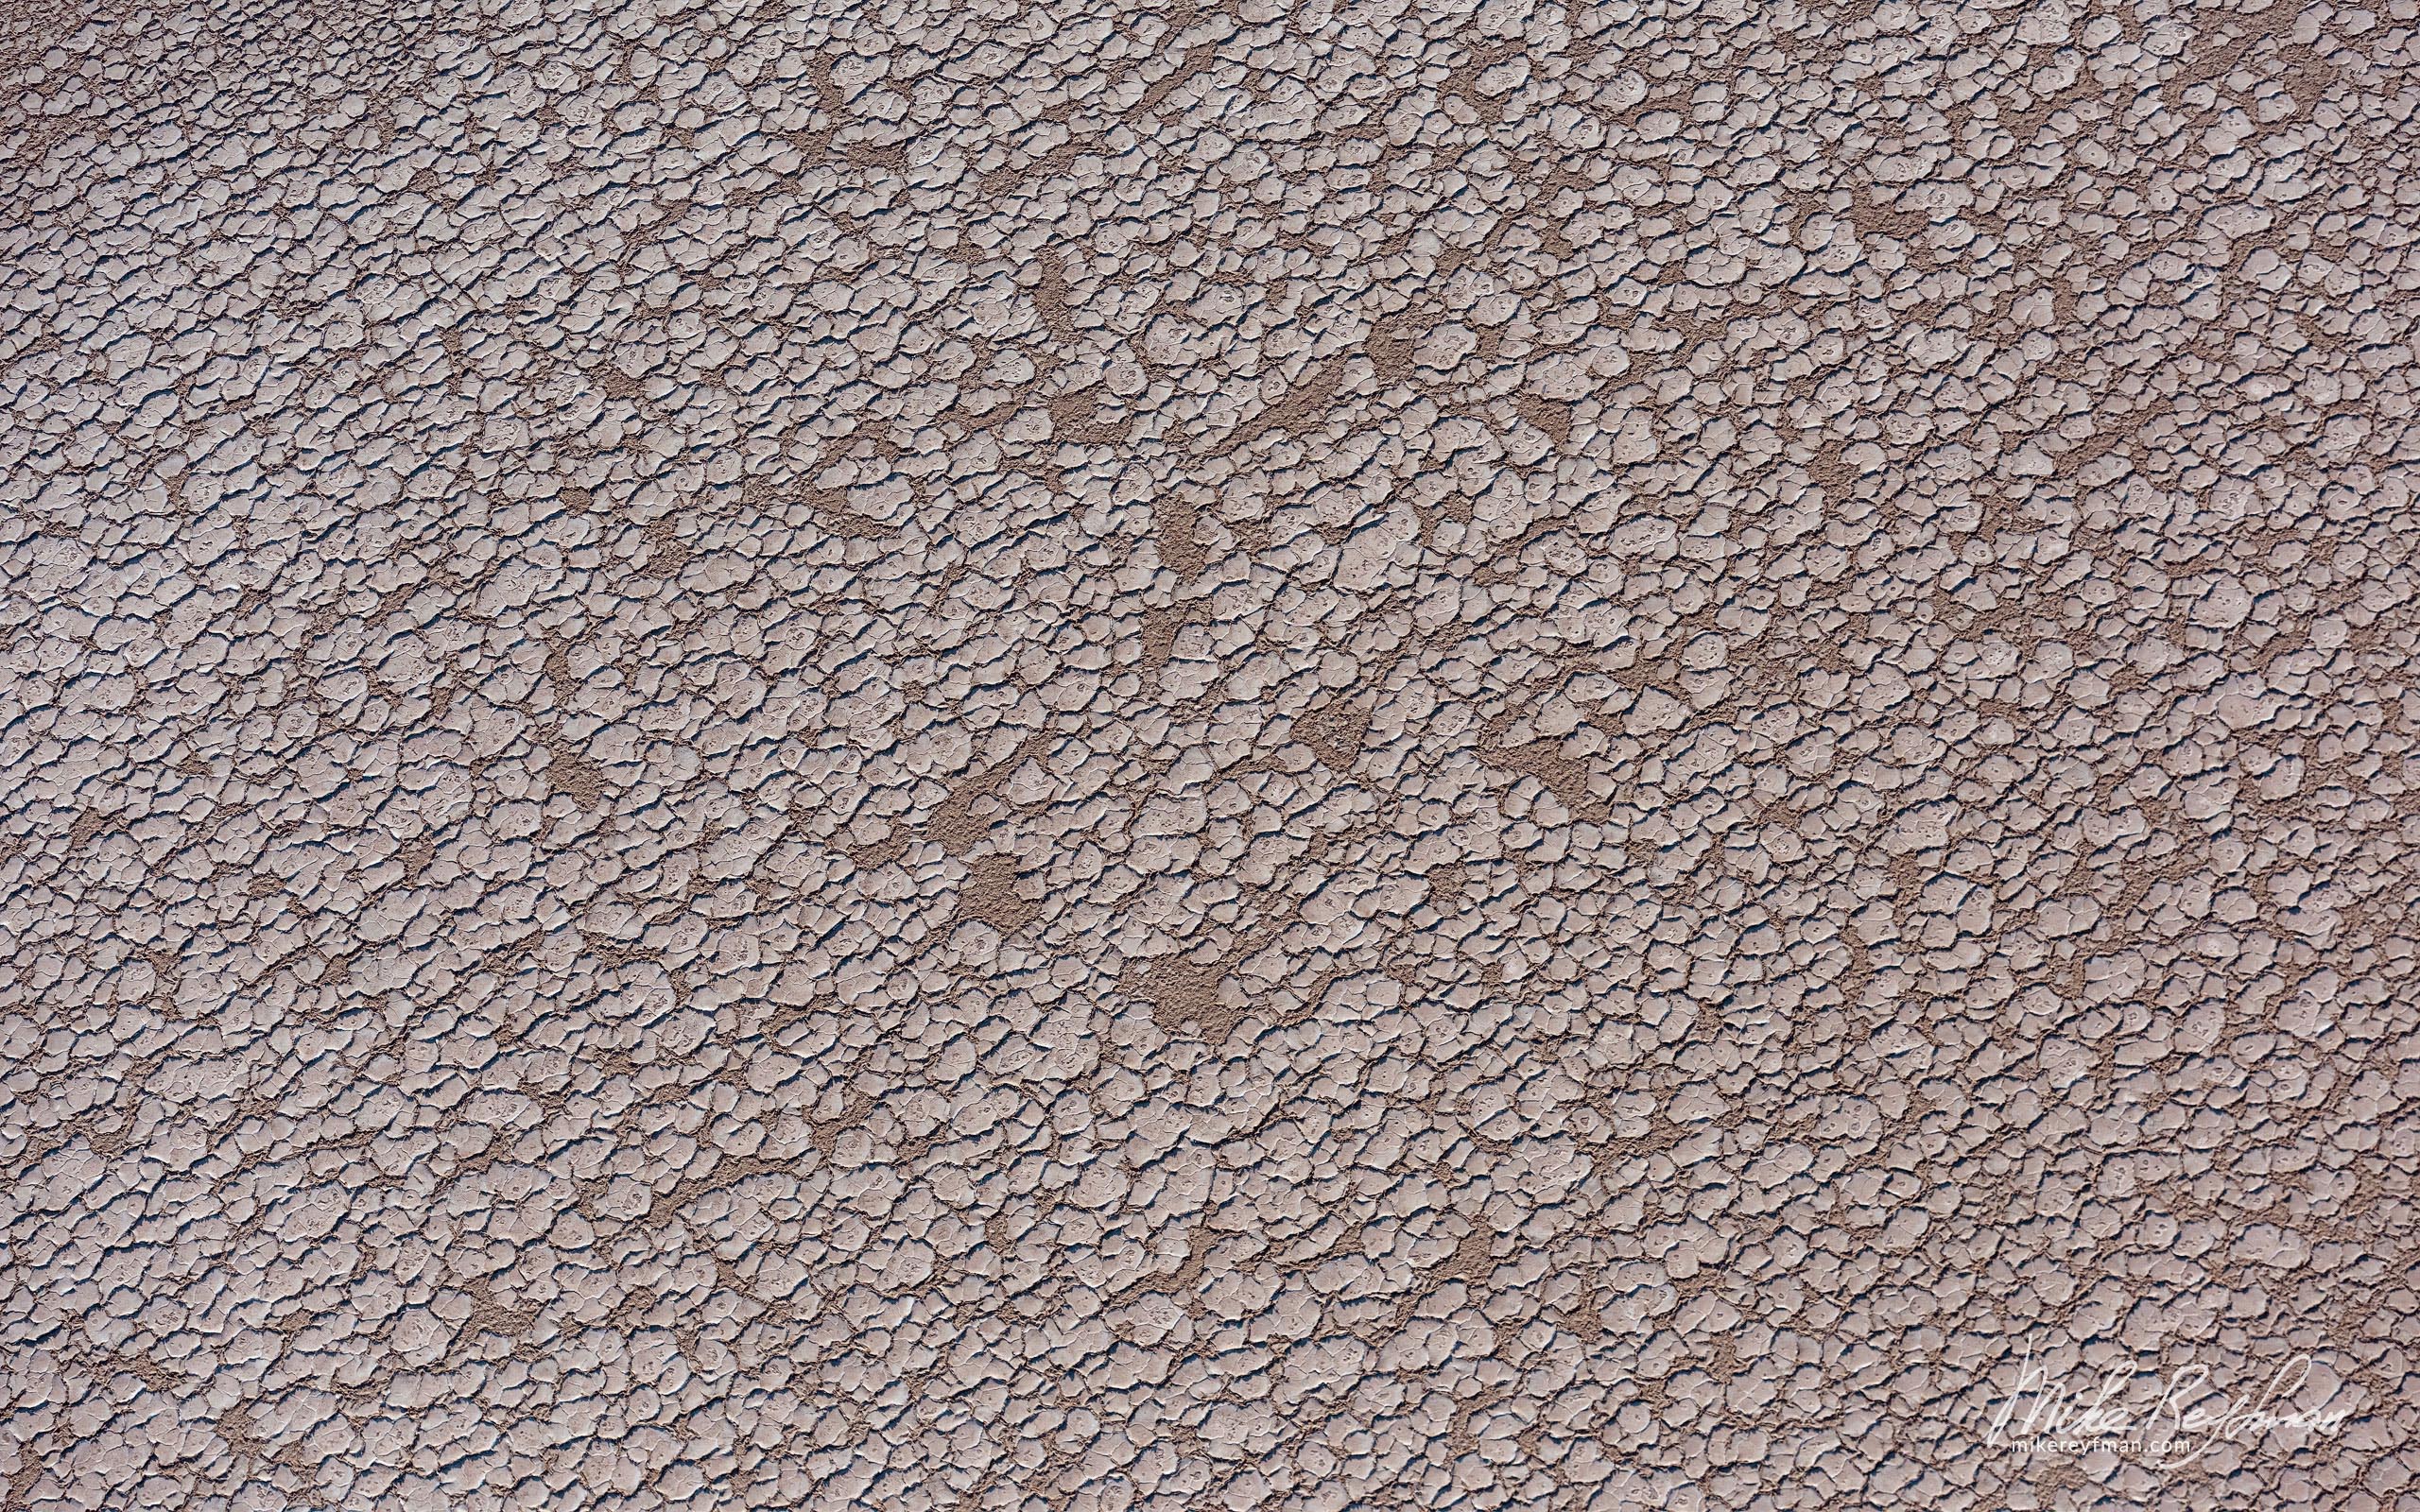 Dried cracked mud patterns on a desert floor. Namib Skeleton Coast National Park, Namibia SCW_059_10N4560 - Shipwrecks and Endless Dunes of Namib Skeleton Coast NP, Dense ocean fogs of the Benguela Current, Cape Fur seals, and Walvis Bay Salt Works. Namibia.  - Mike Reyfman Photography